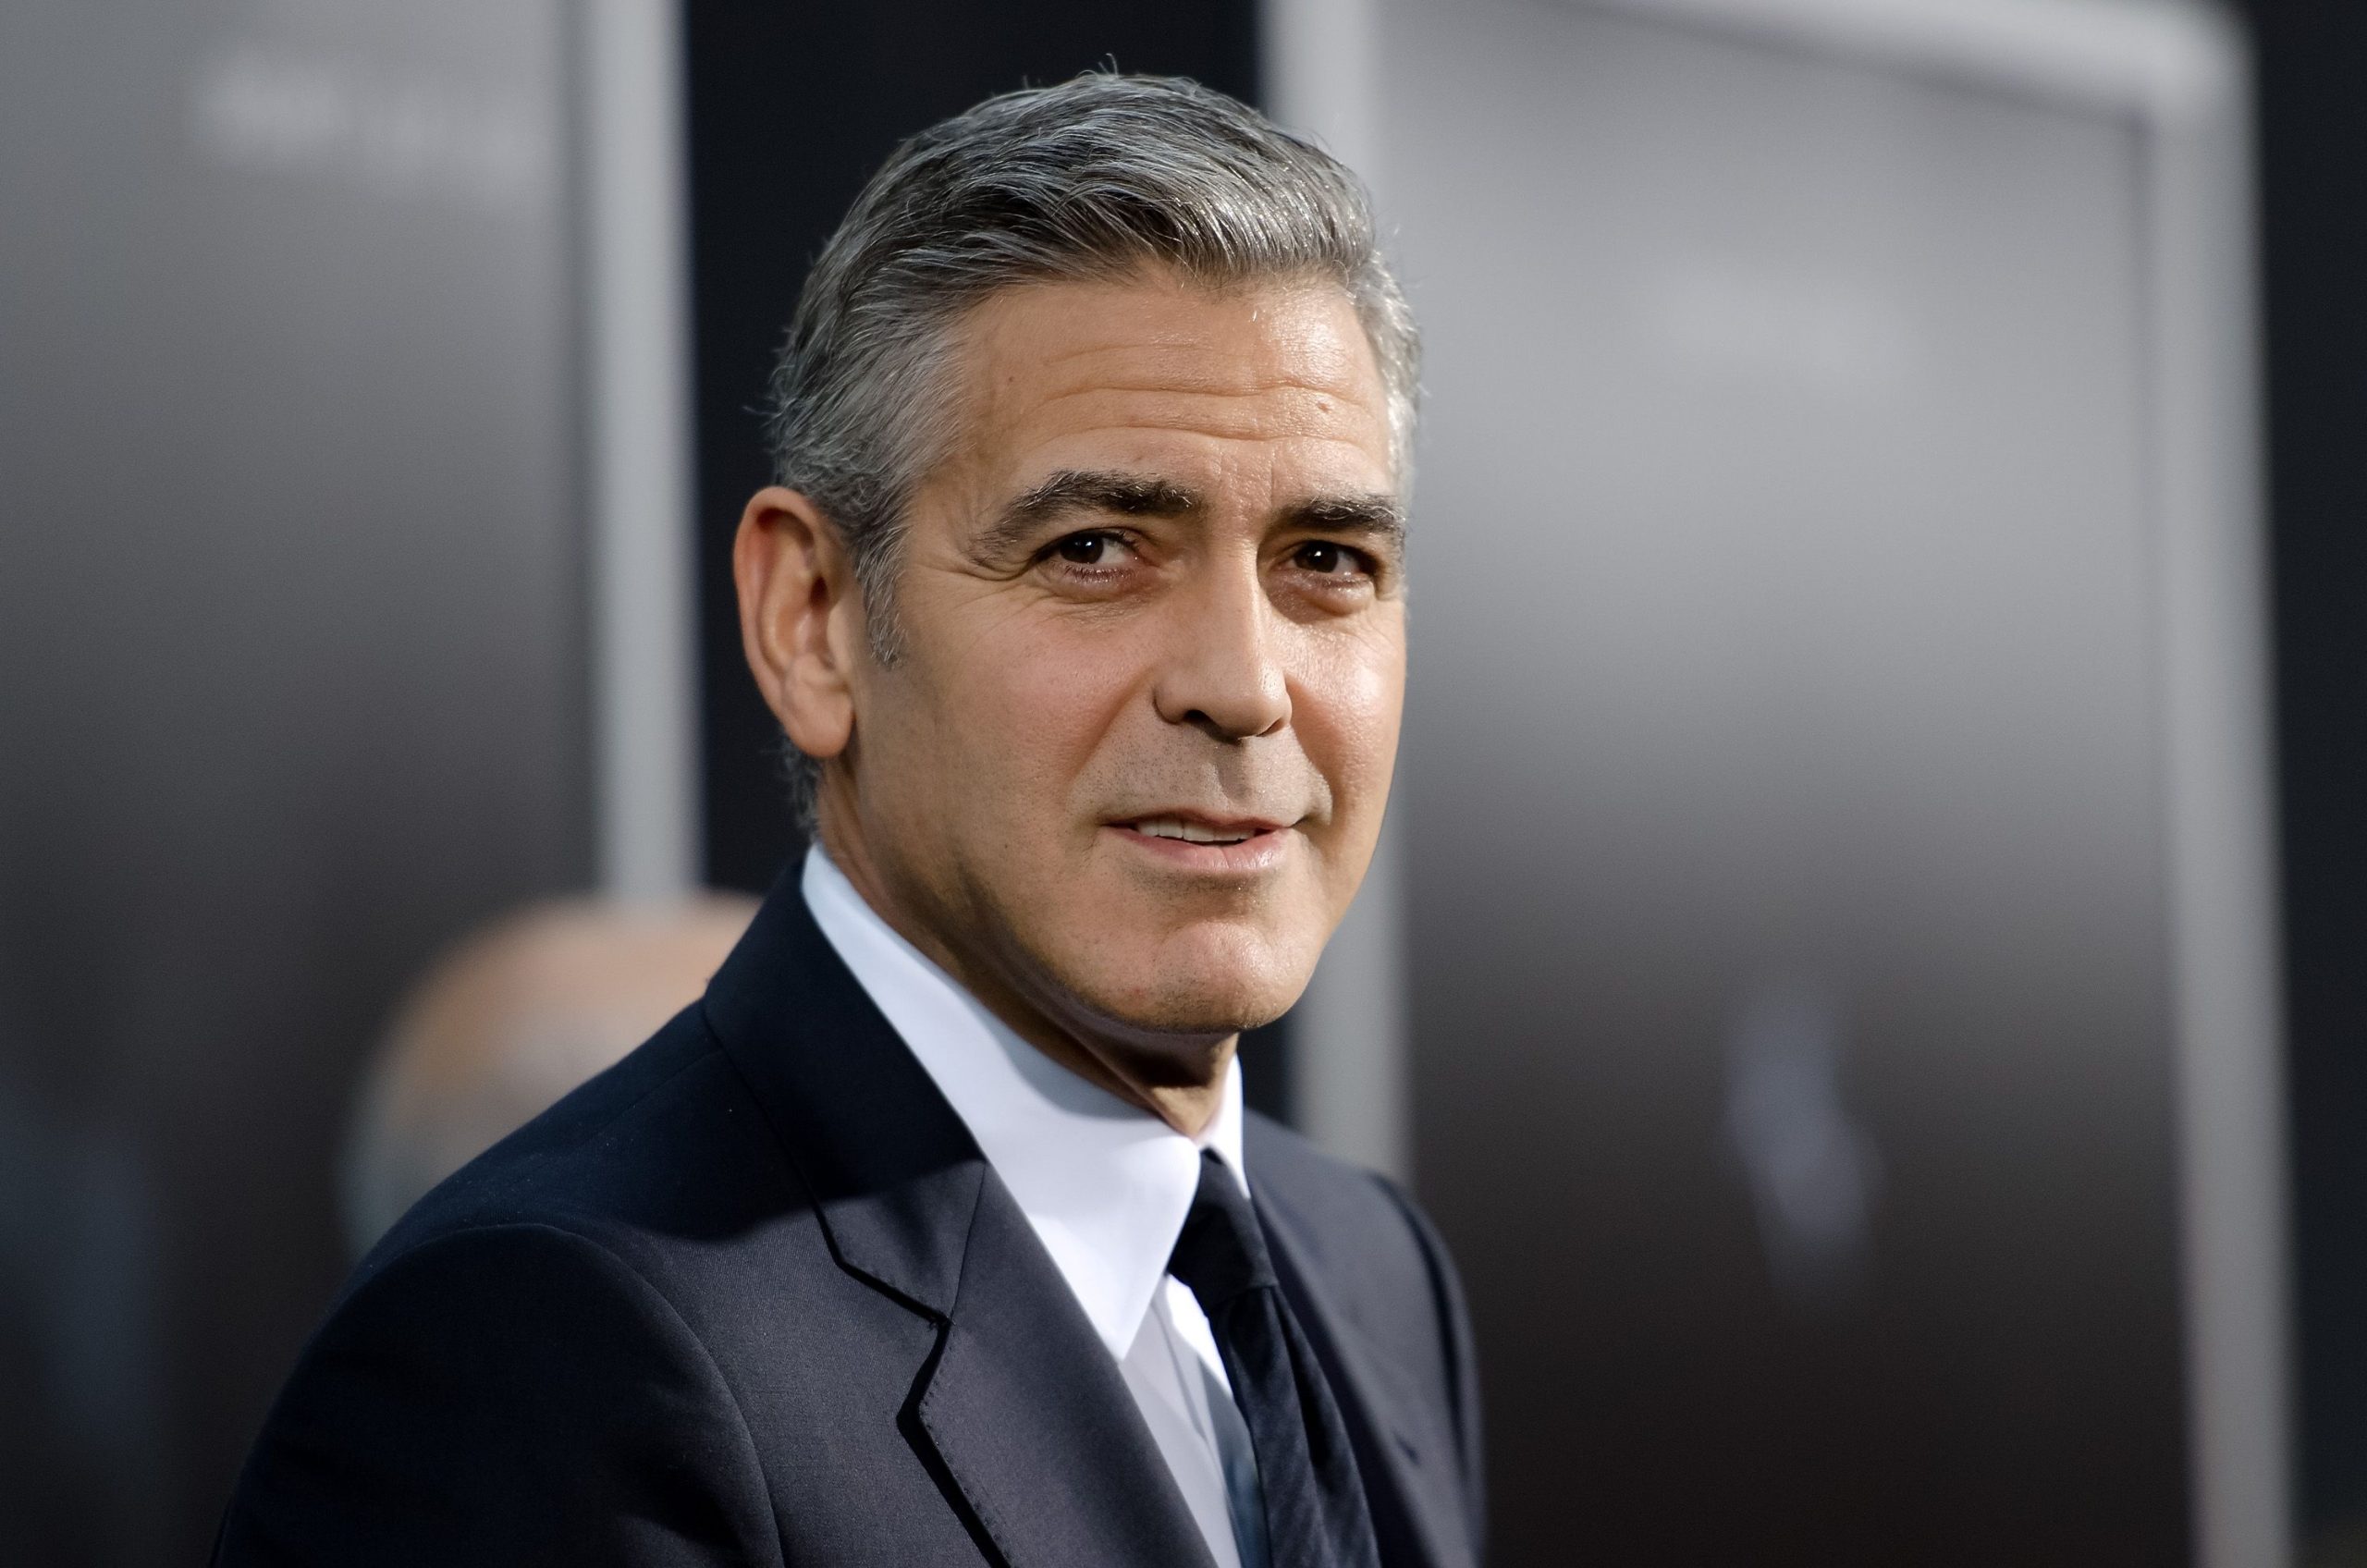 George Clooney open school to train film crews